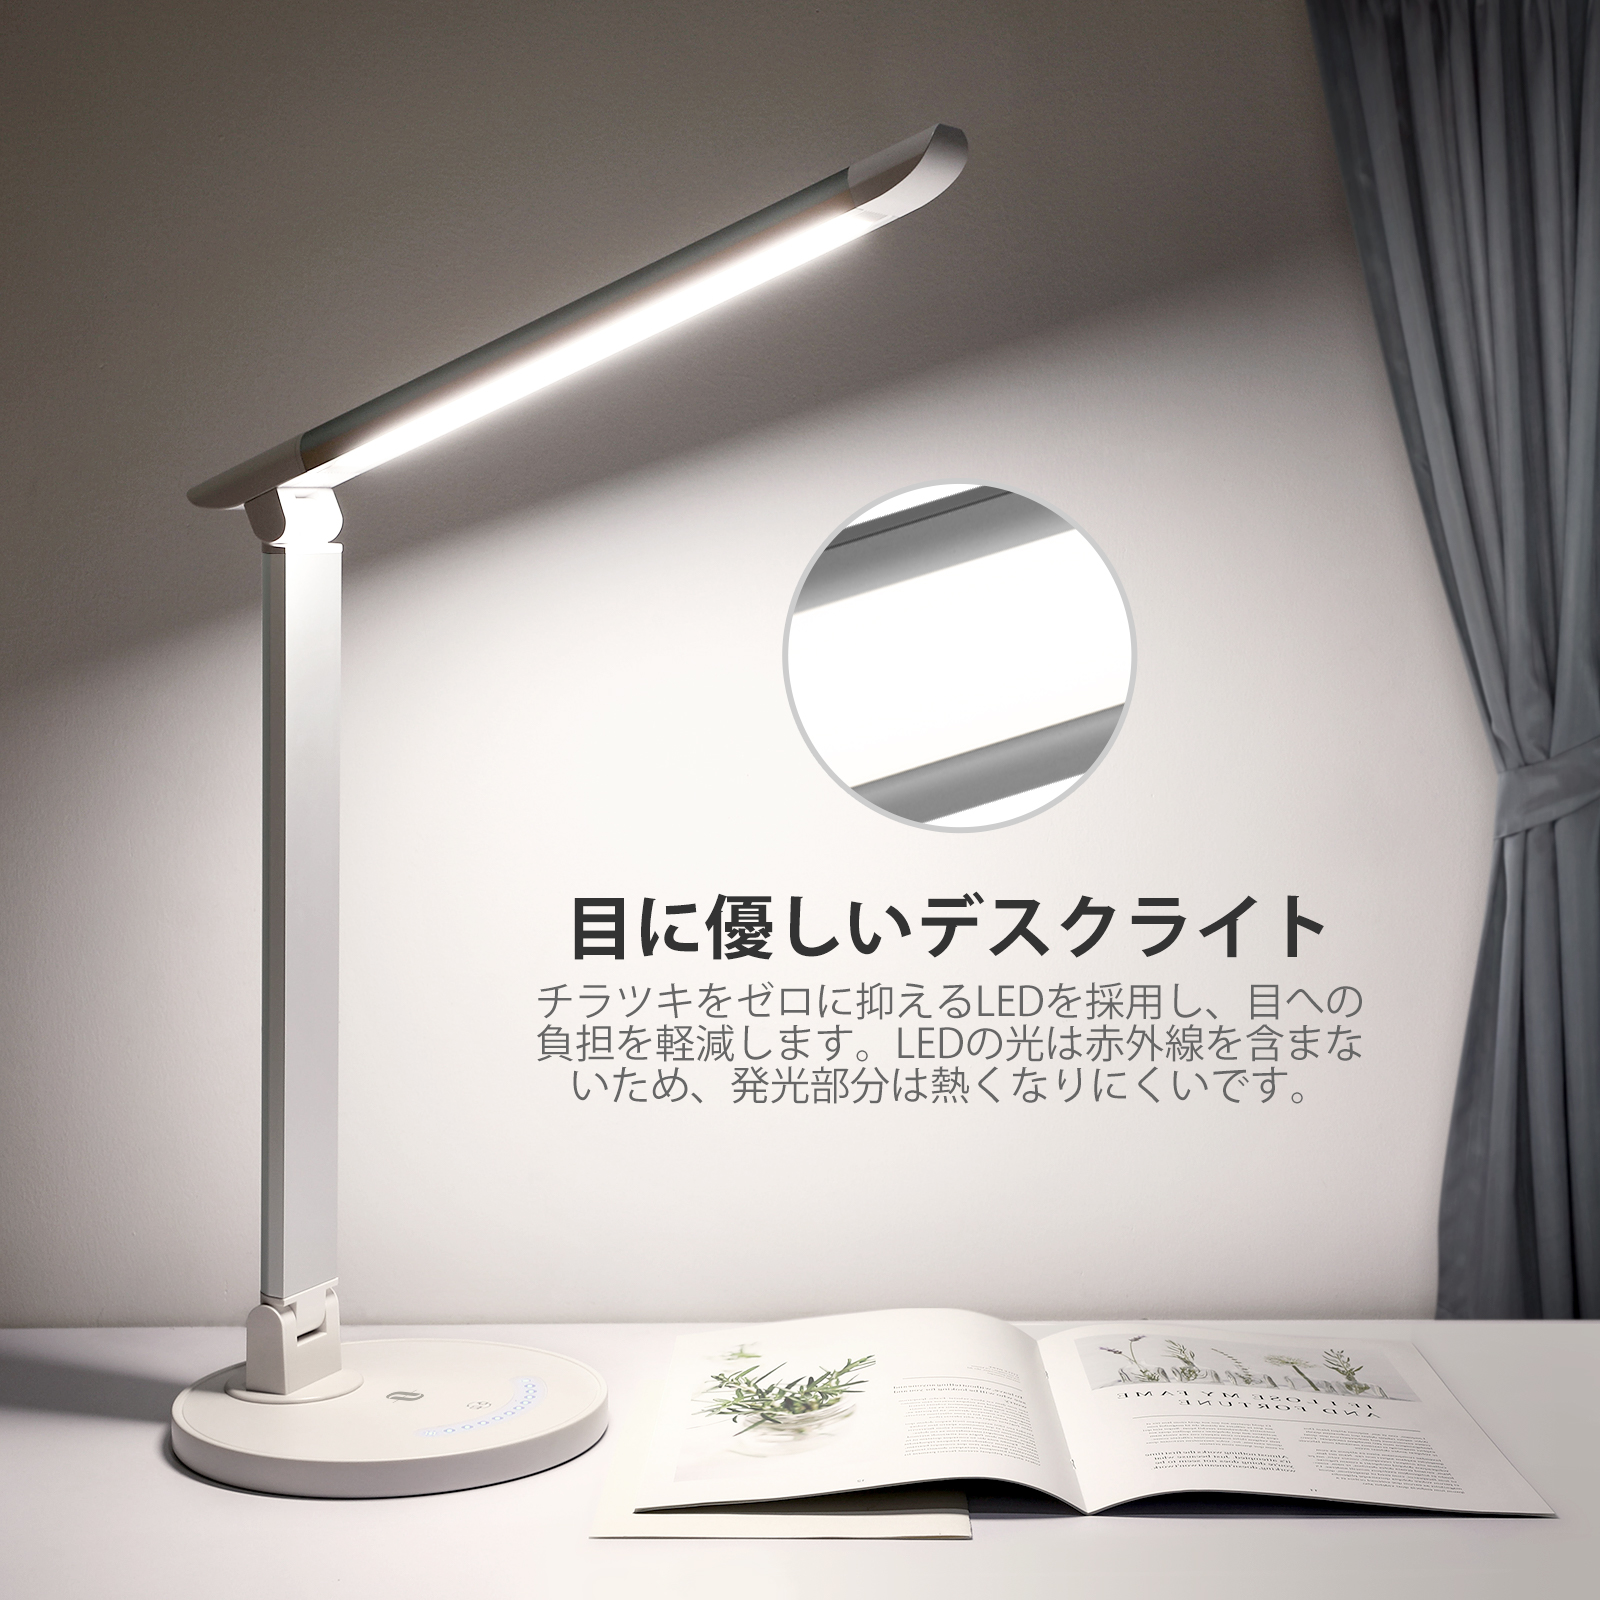 LEDデスクライト TT-DL13 ホワイト【タッチセンサー/7段階調光/USBポート付】 | TaoTronics Japan